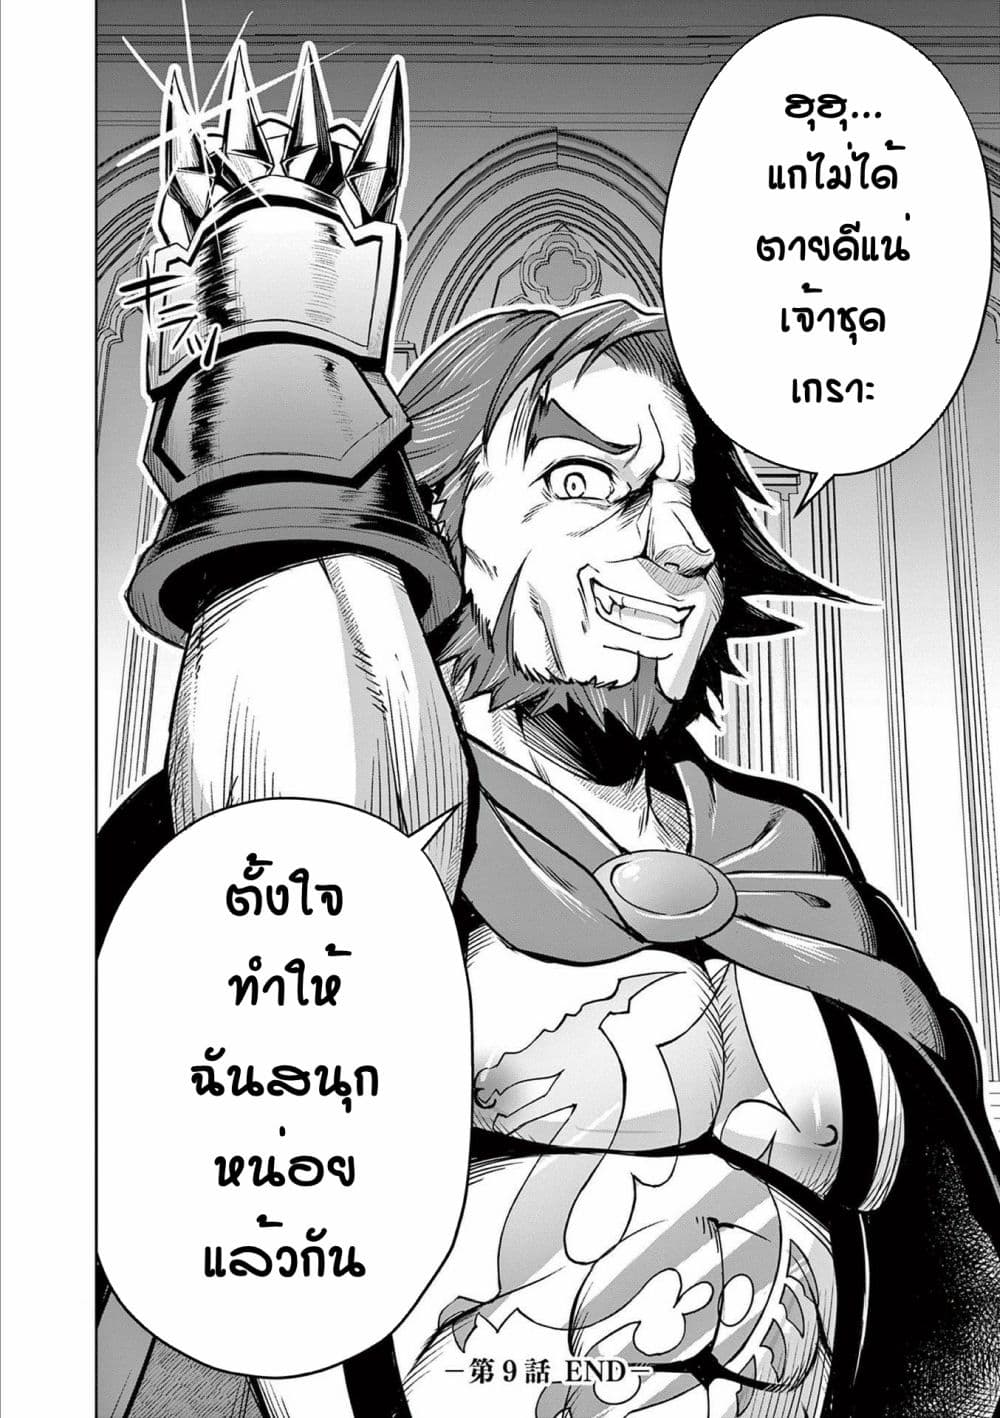 Moto Shogun no Undead Knight 9-9